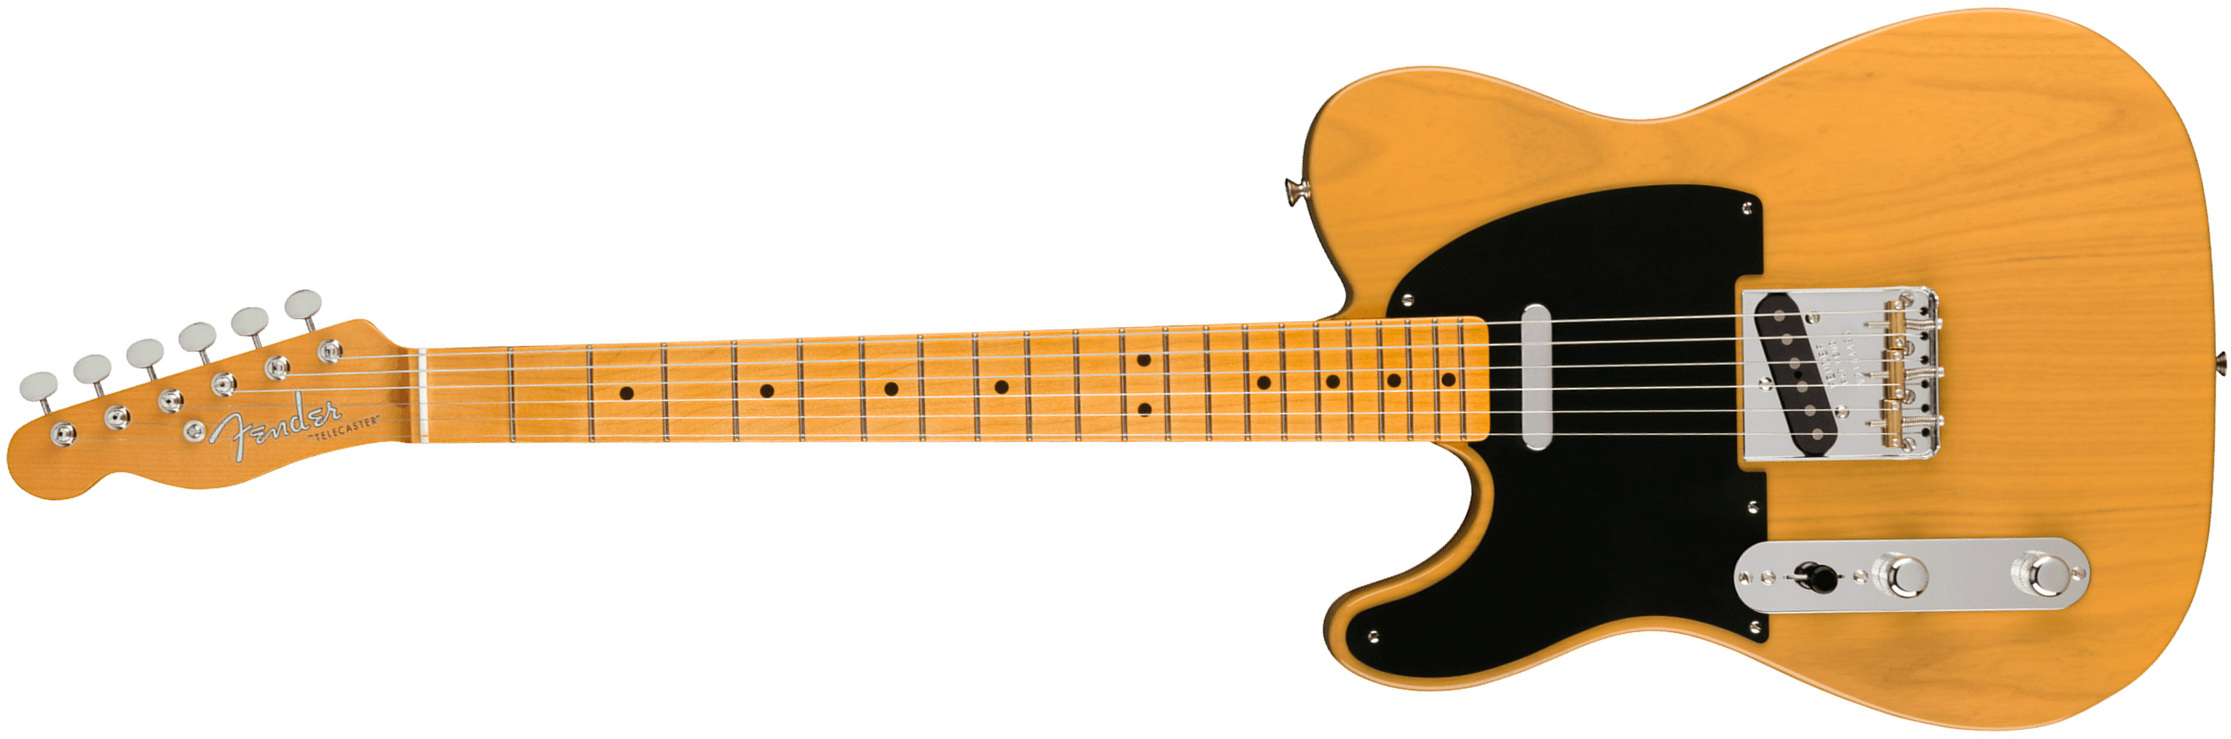 Fender Tele 1951 American Vintage Ii Lh Gaucher 2s Ht Mn - Butterscotch Blonde - Left-handed electric guitar - Main picture